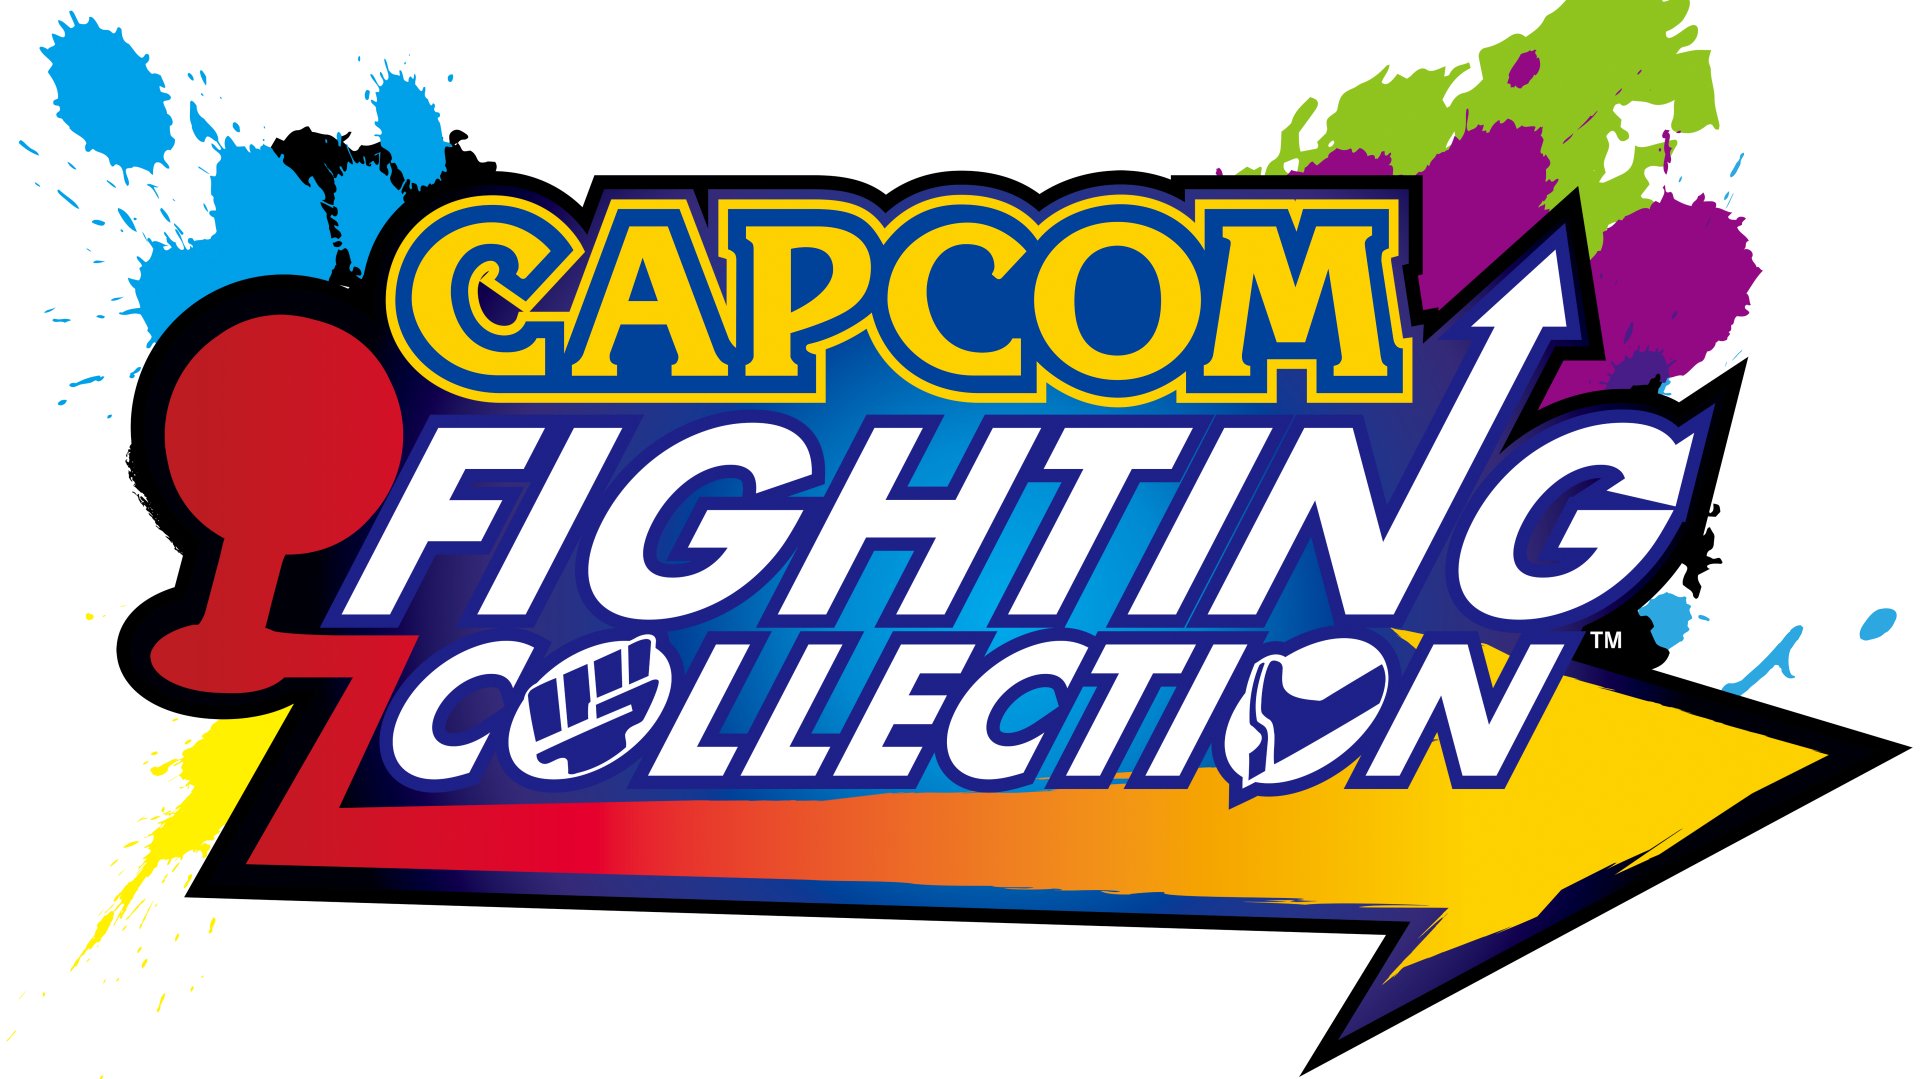 Capcom Fighting Collection Key Art